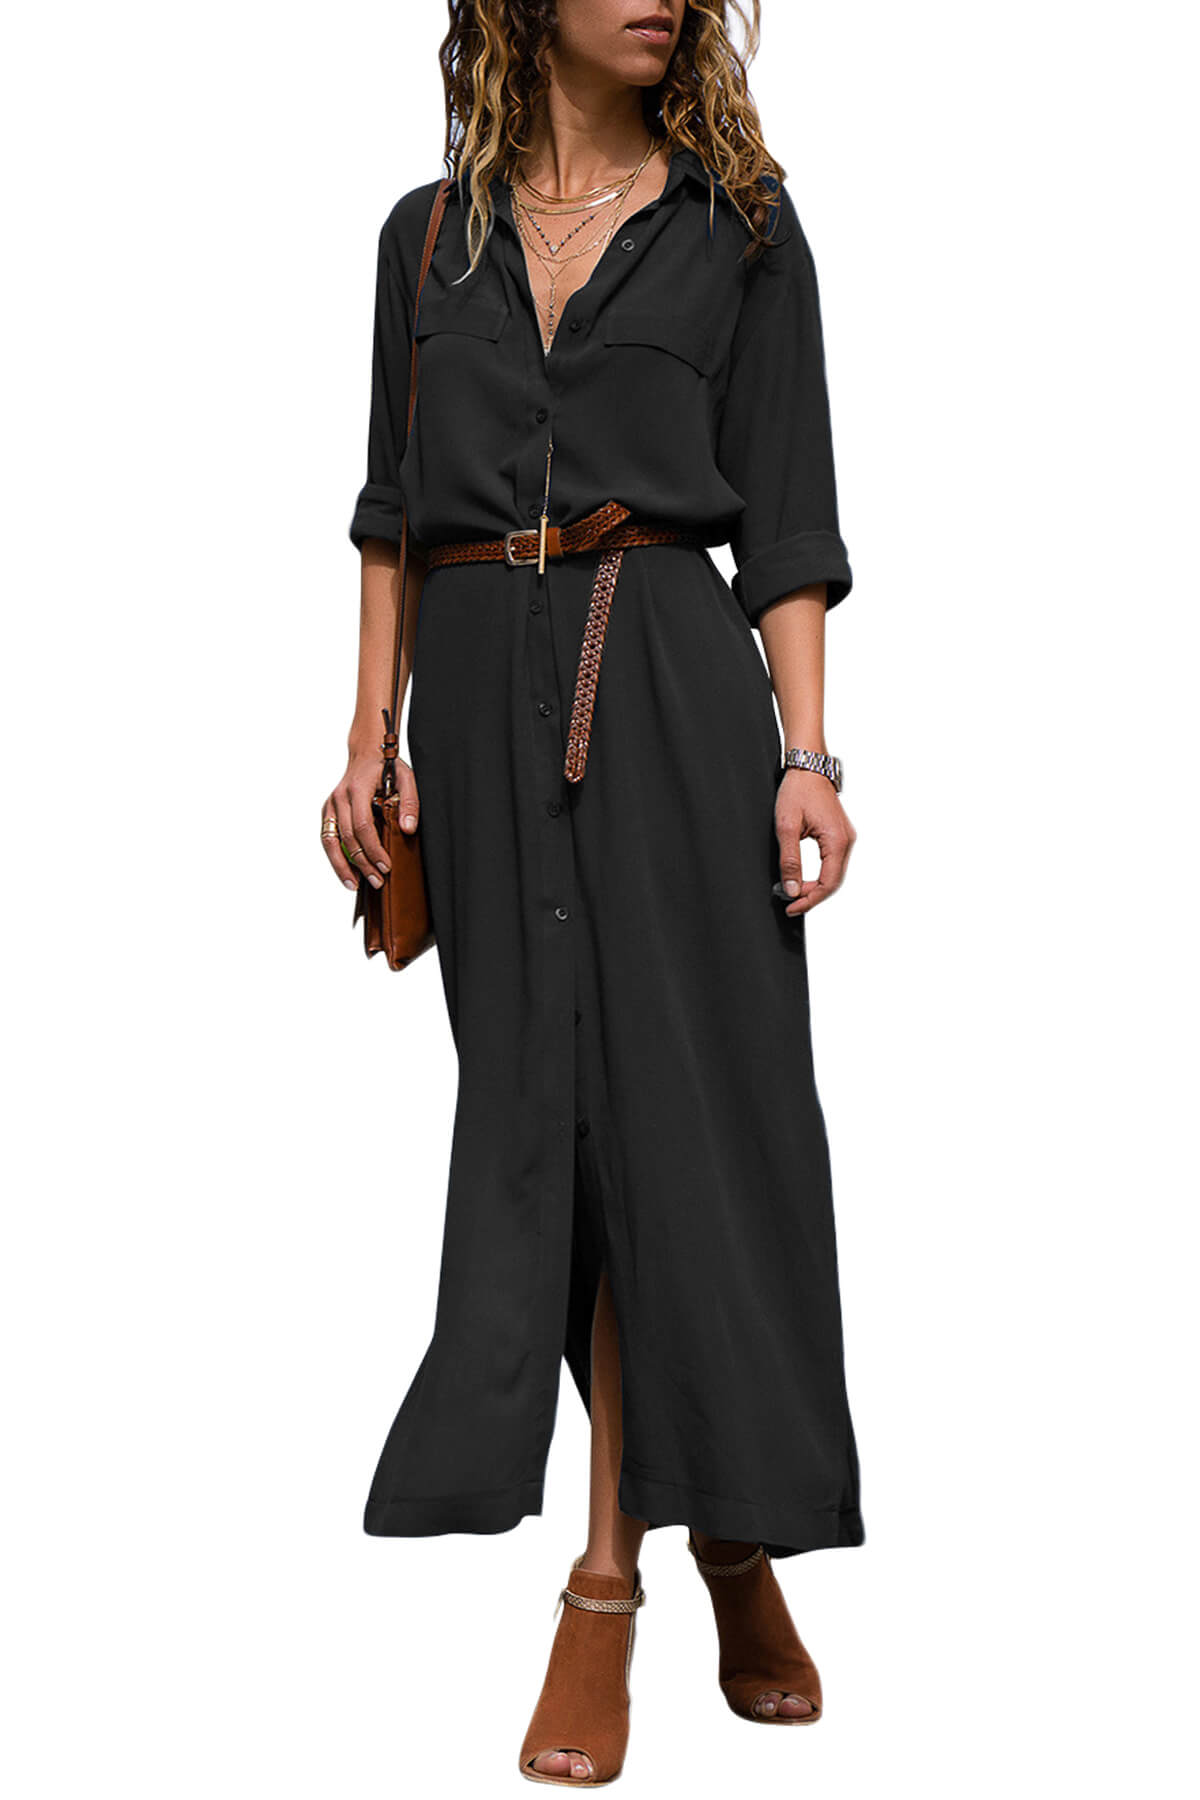 Black Slit Maxi Shirt Dress with Sash - (US 12-14)L